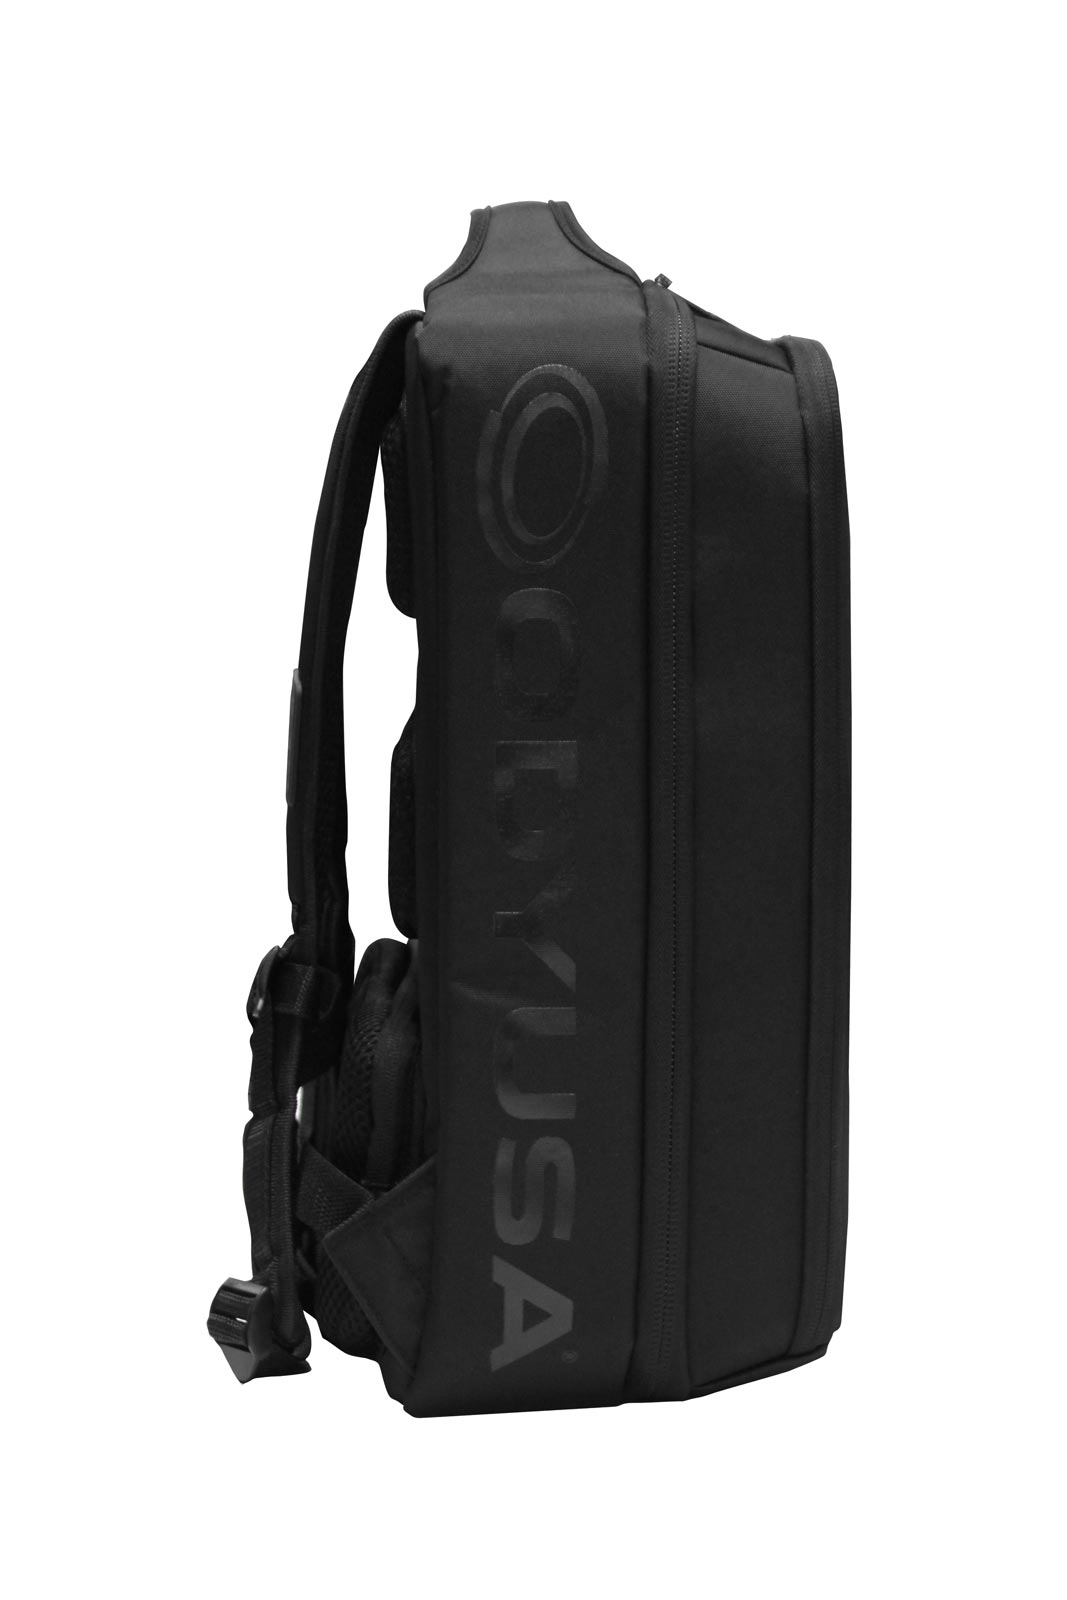 Odyssey BRXMK2BP10 Standard Size Digital Gear Backpack - Holds 10